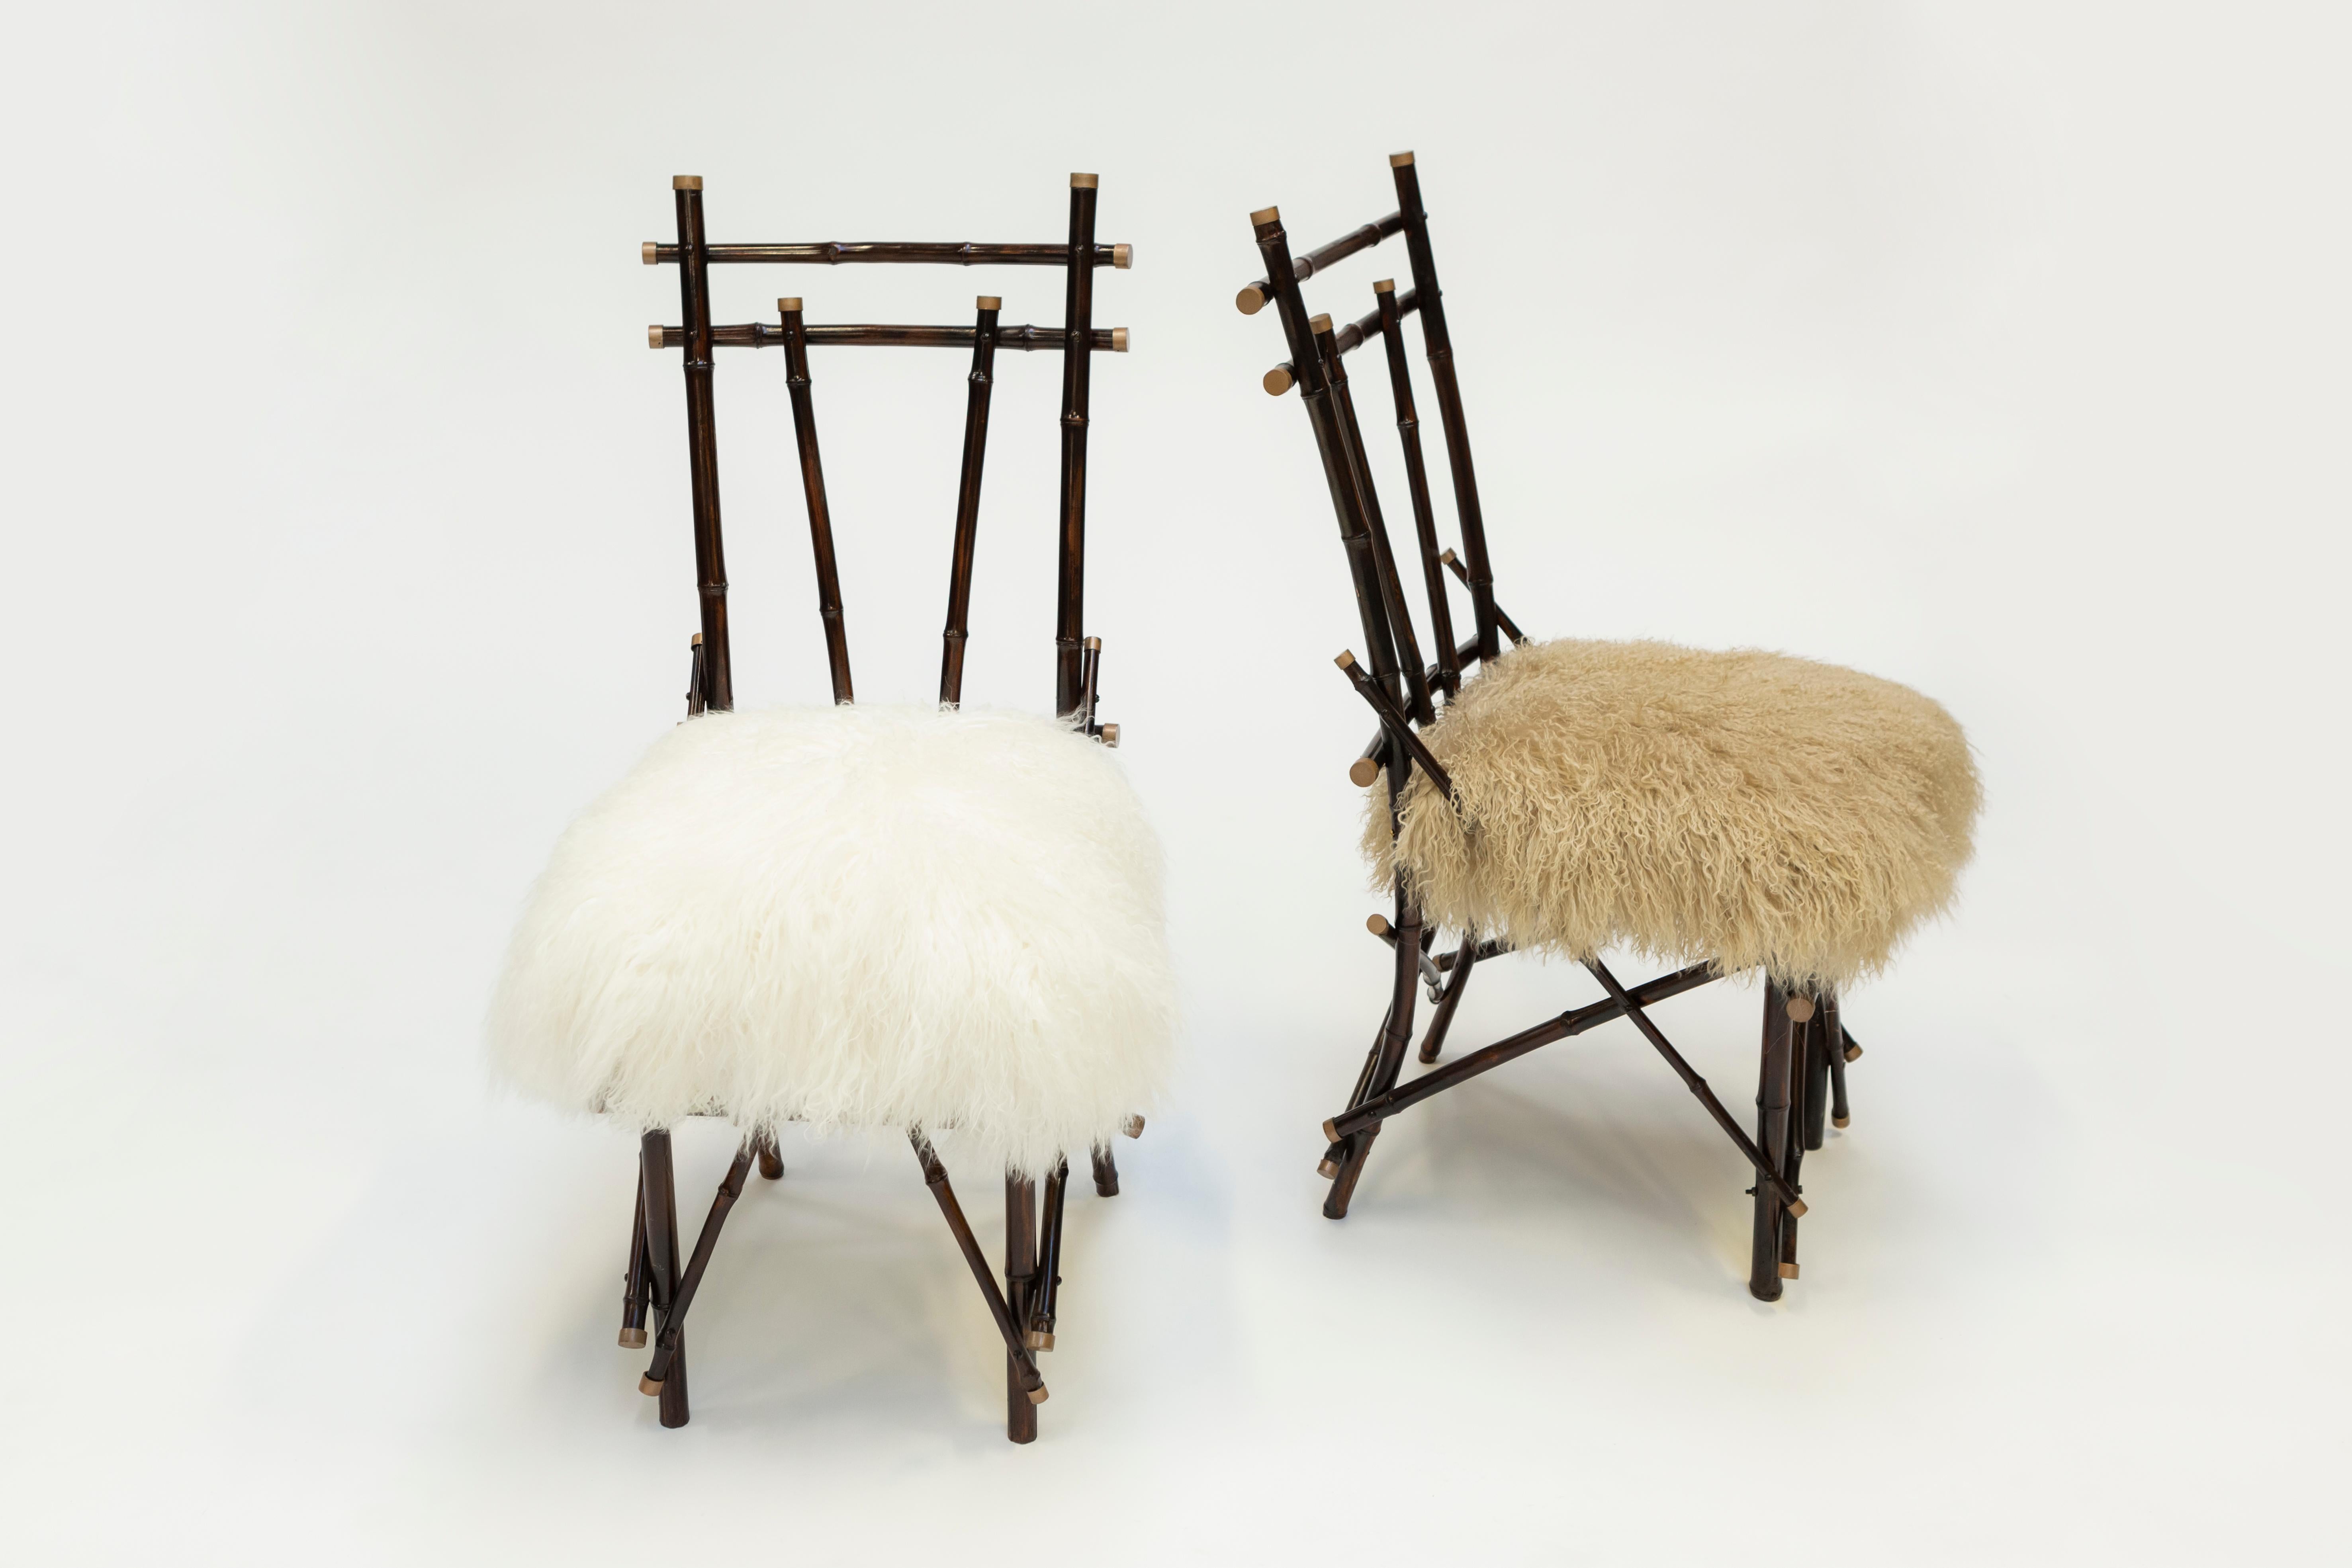 Italian Vintage Chairs 1960 Transformed, Draga&Aurel 21st Century Fur